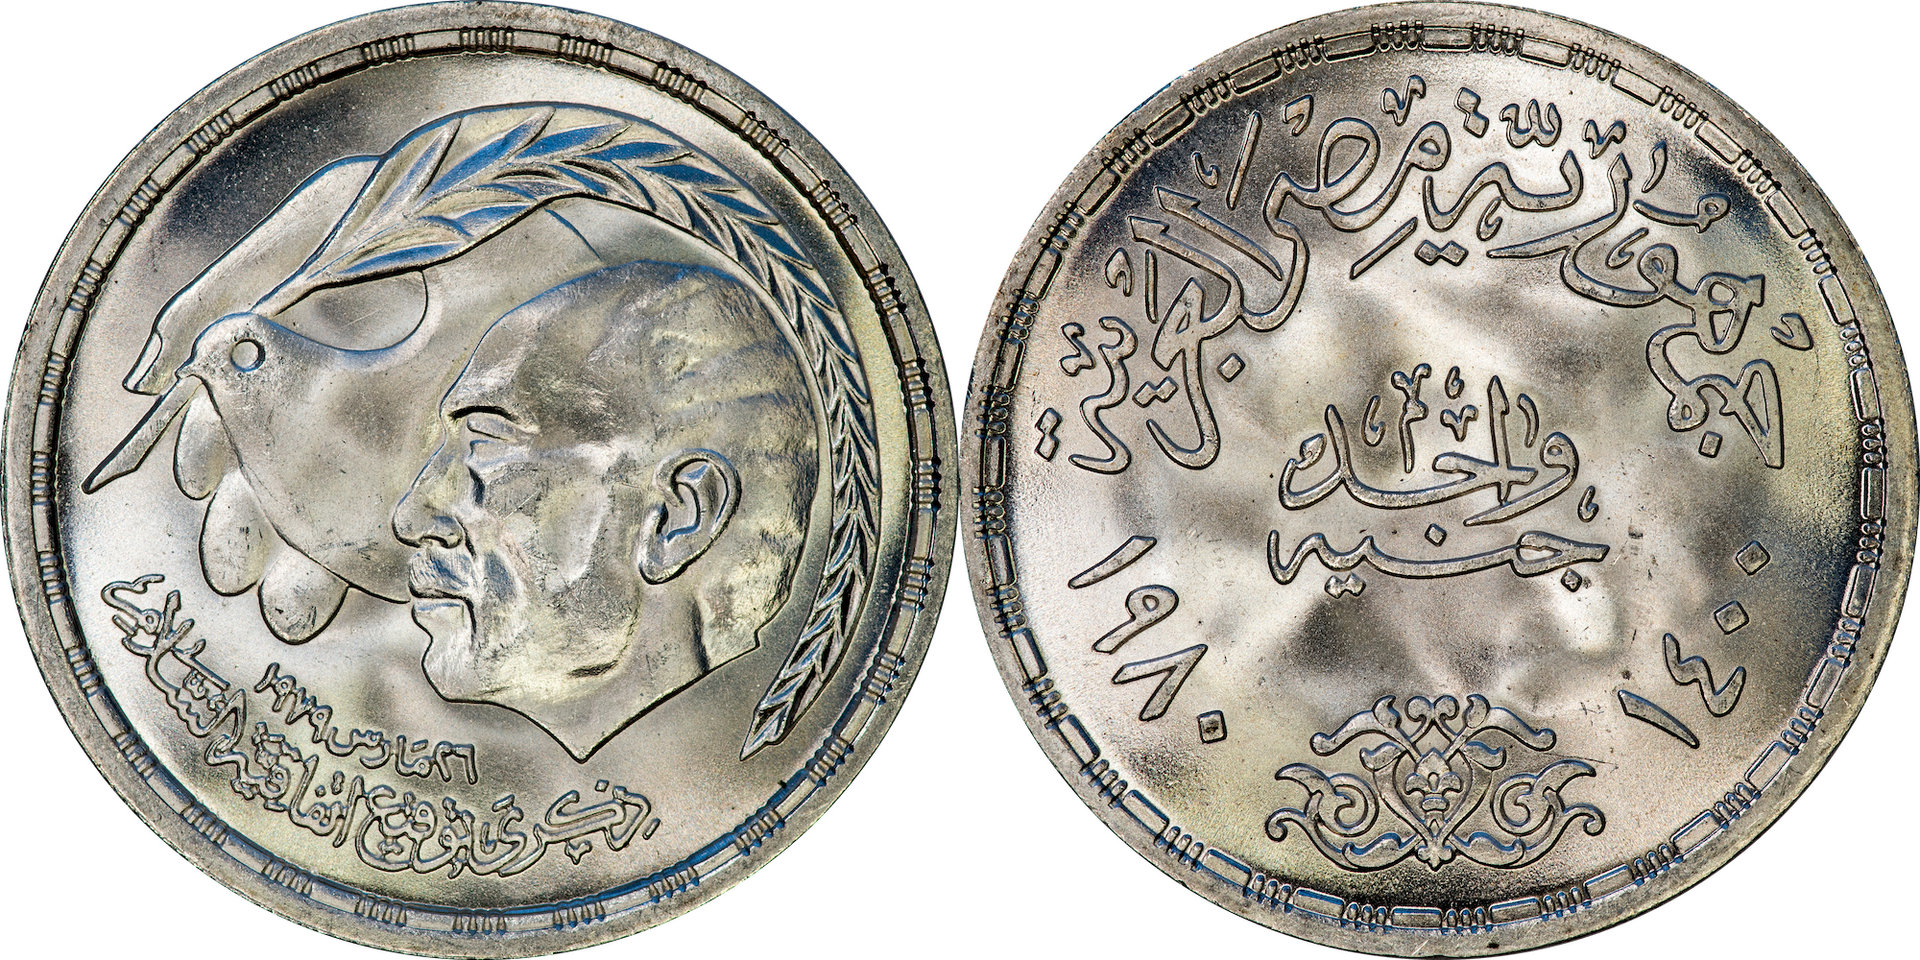 Egypt - 1980 1 Pound.jpg